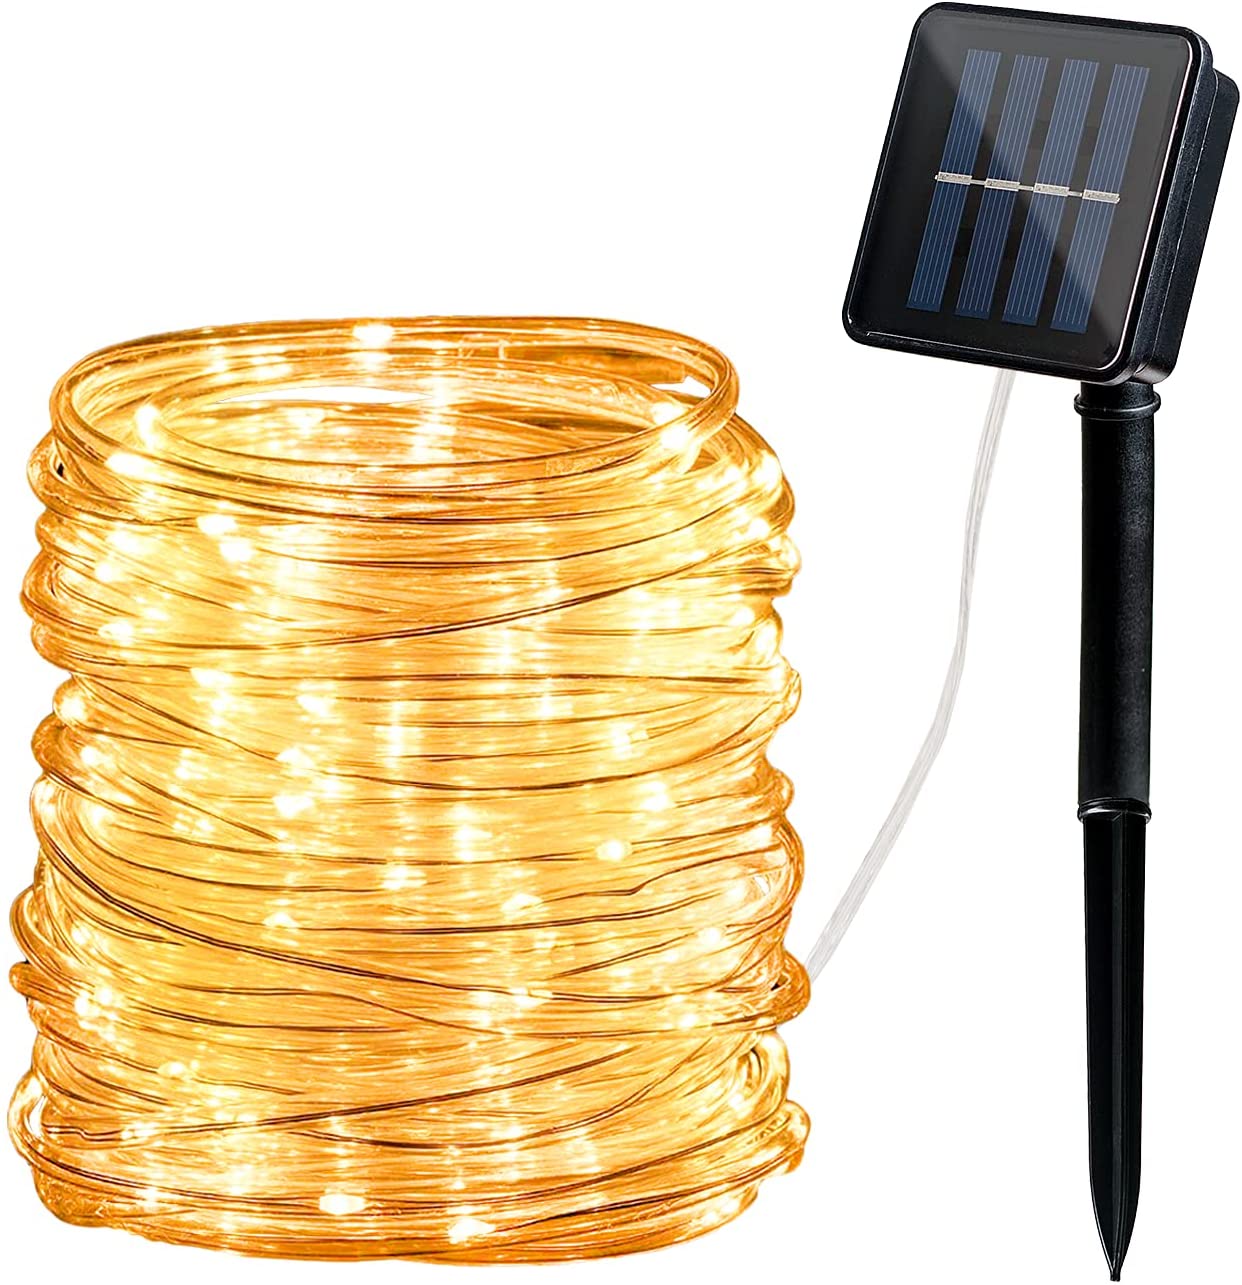 New Sharper Image® Solar-Powered Party Light 